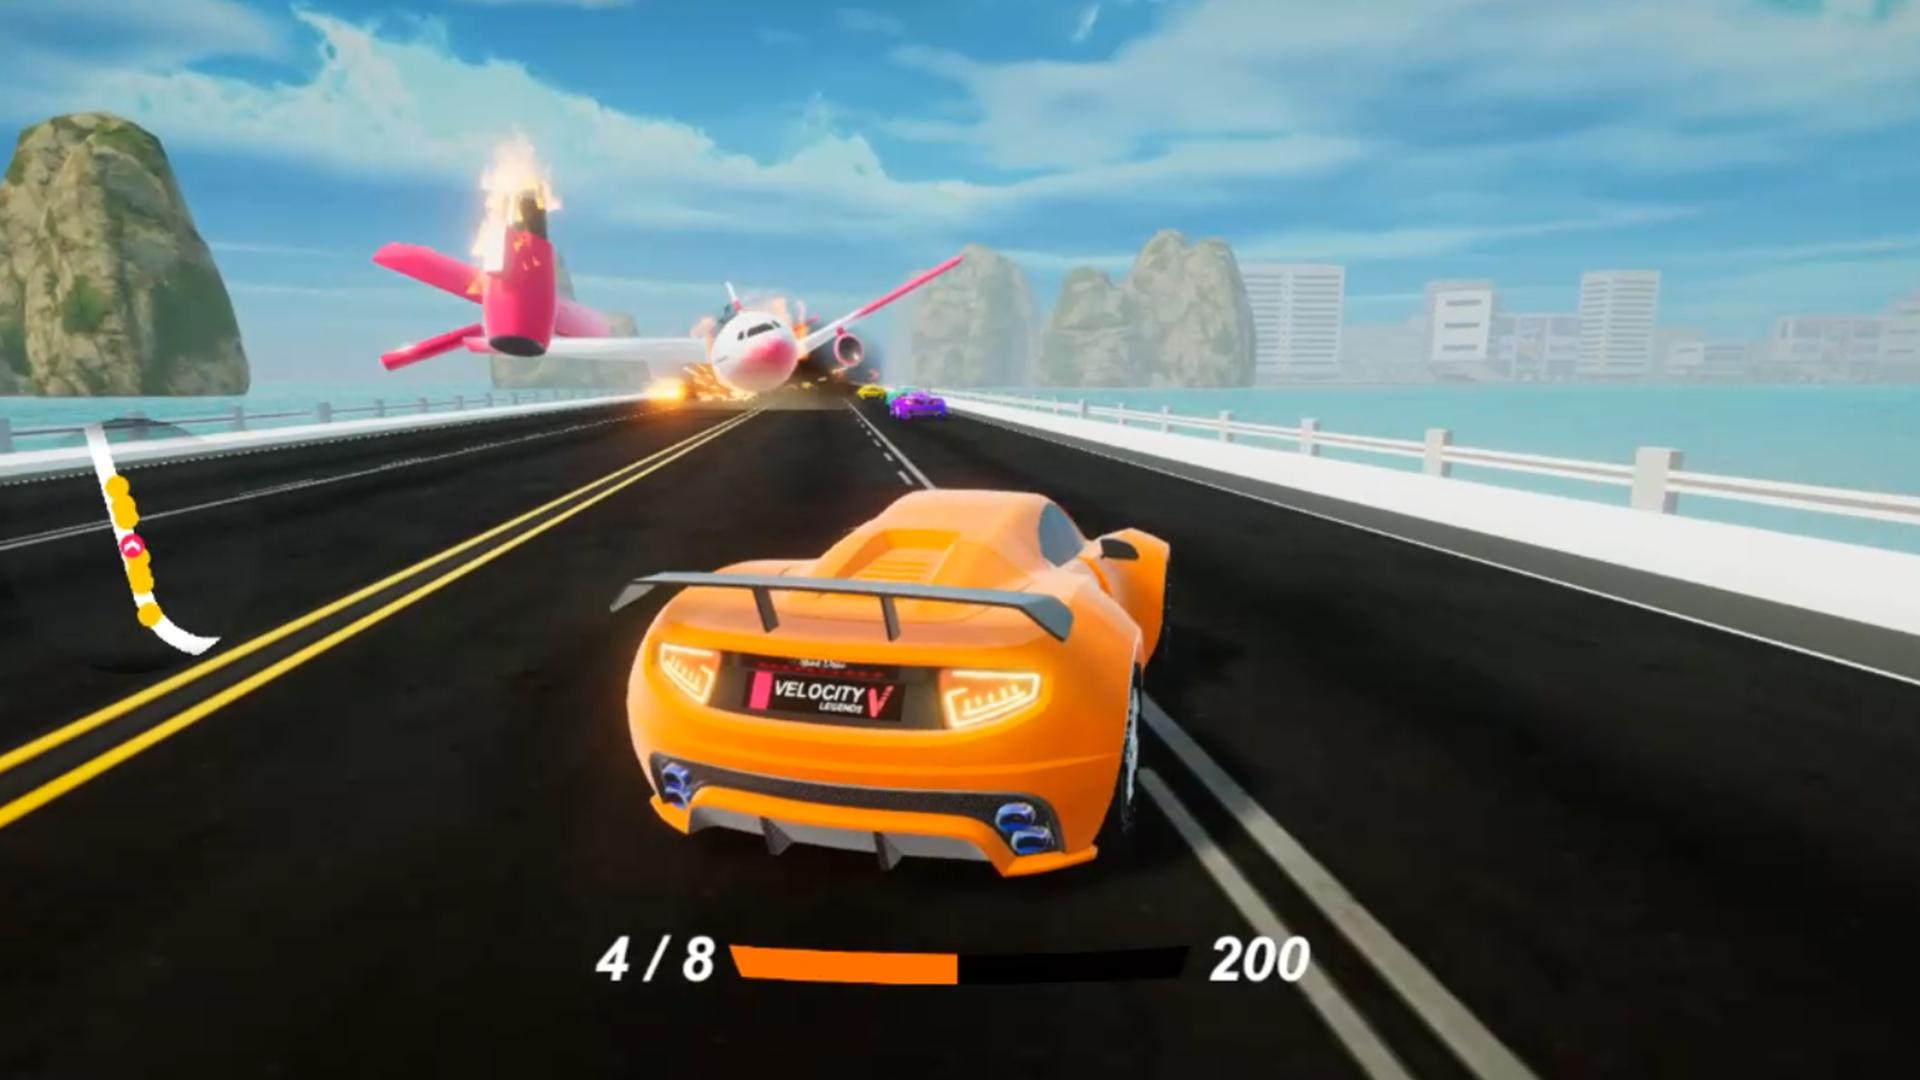 Velocity Legends Asphalt Car Action Racing Game 1.43 Screenshot 13